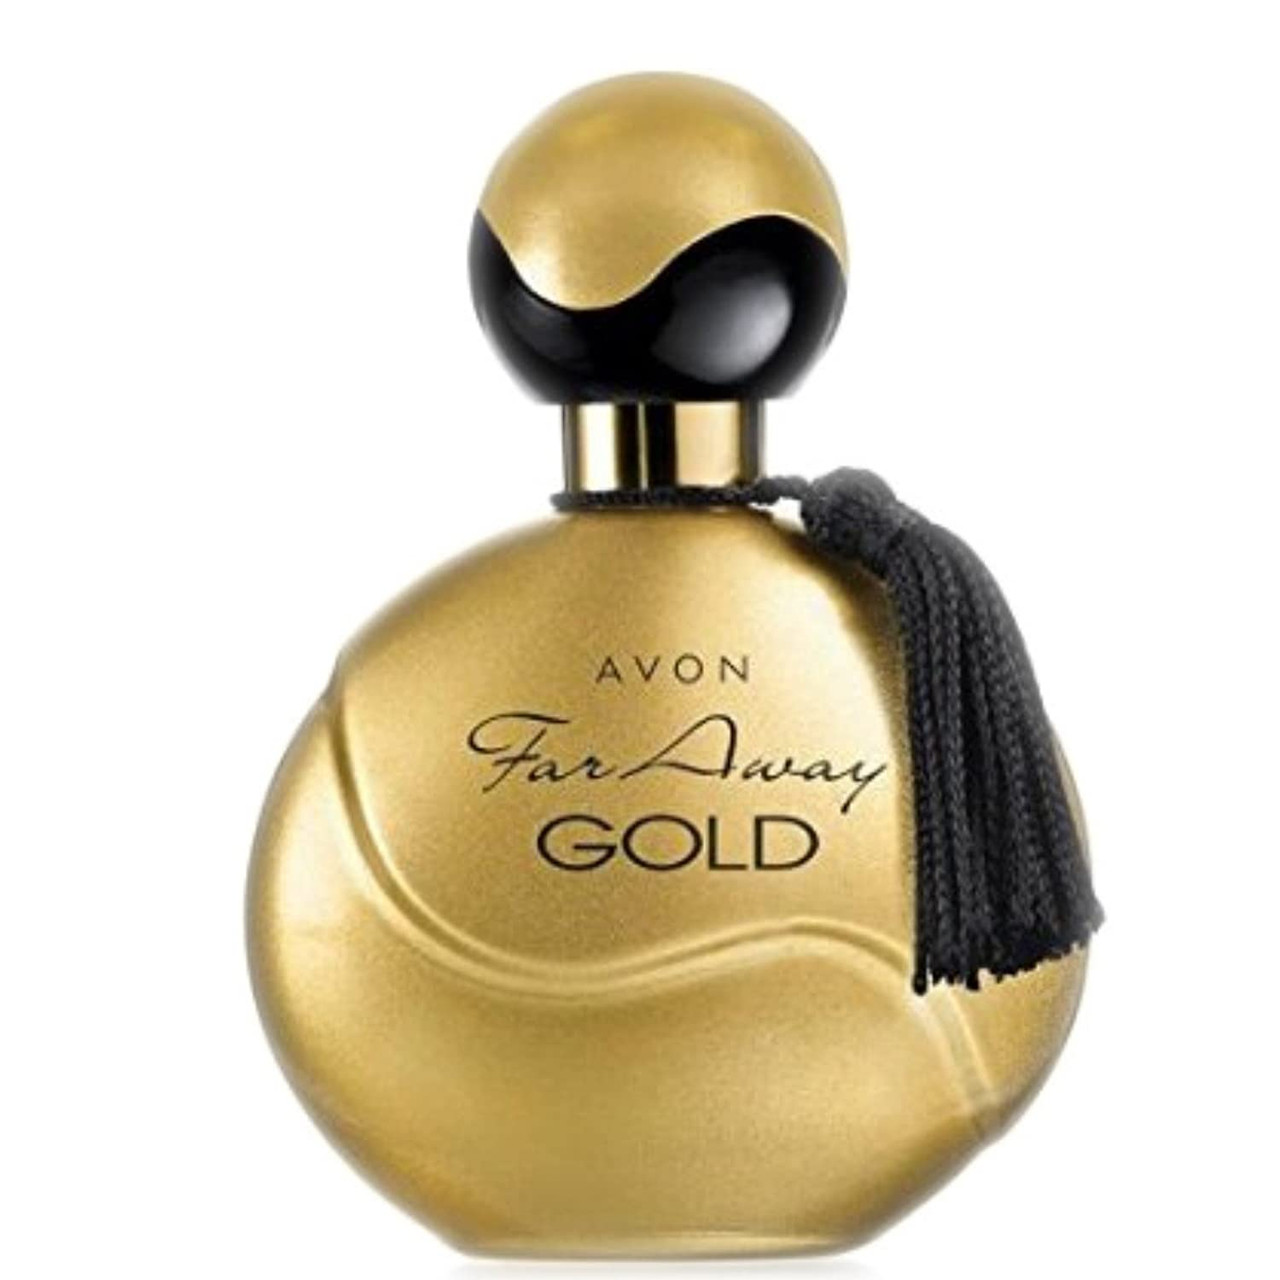 Avon Far Away Eau De Parfum Spray 1.7 oz each (perfume for women)